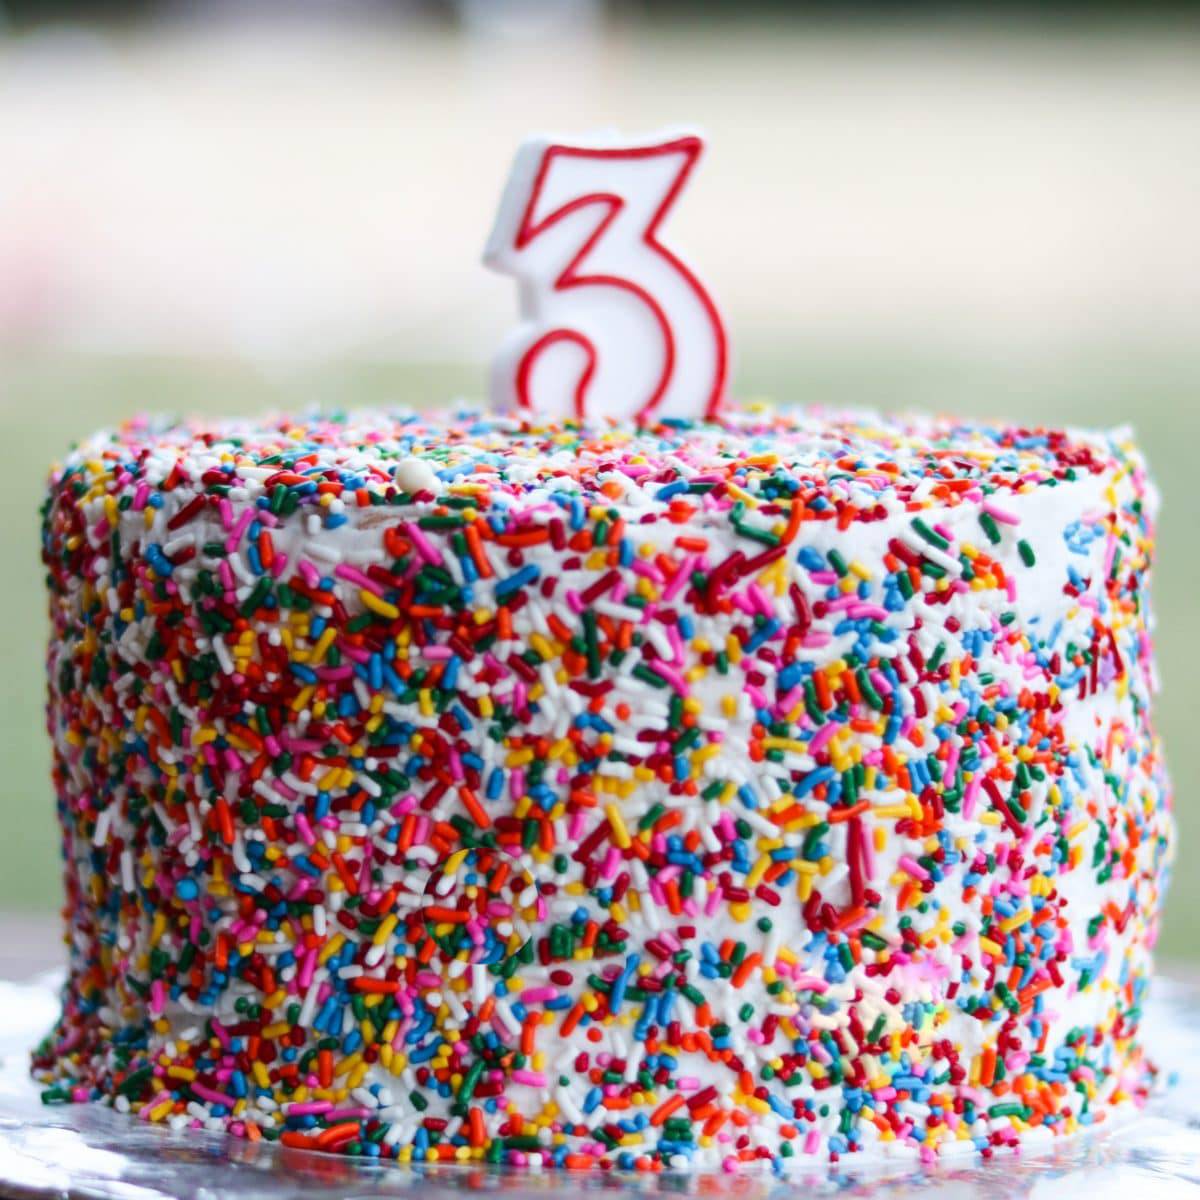 How To Make An Exploding Cake || Erin Brighton | gluten free | kids' cakes | birthday cakes | decorating 